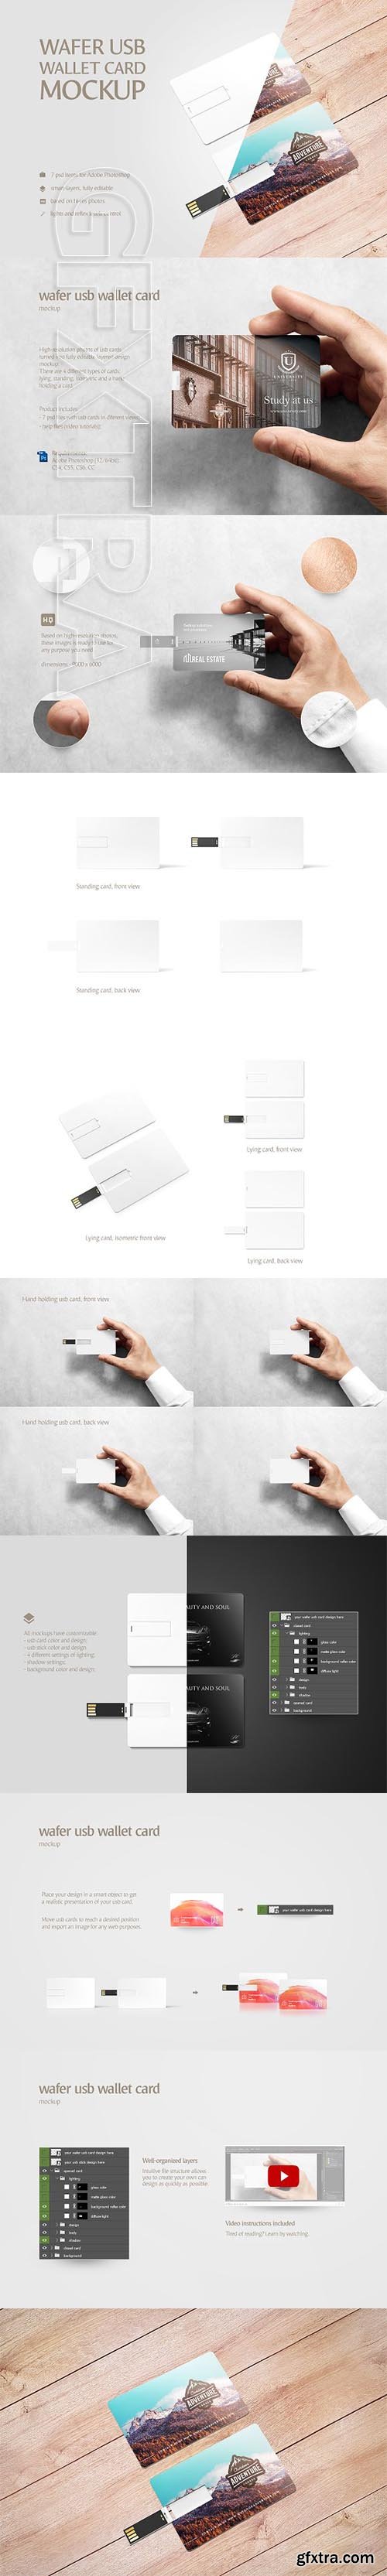 CreativeMarket - Wafer USB Wallet Card Mockup 2310691